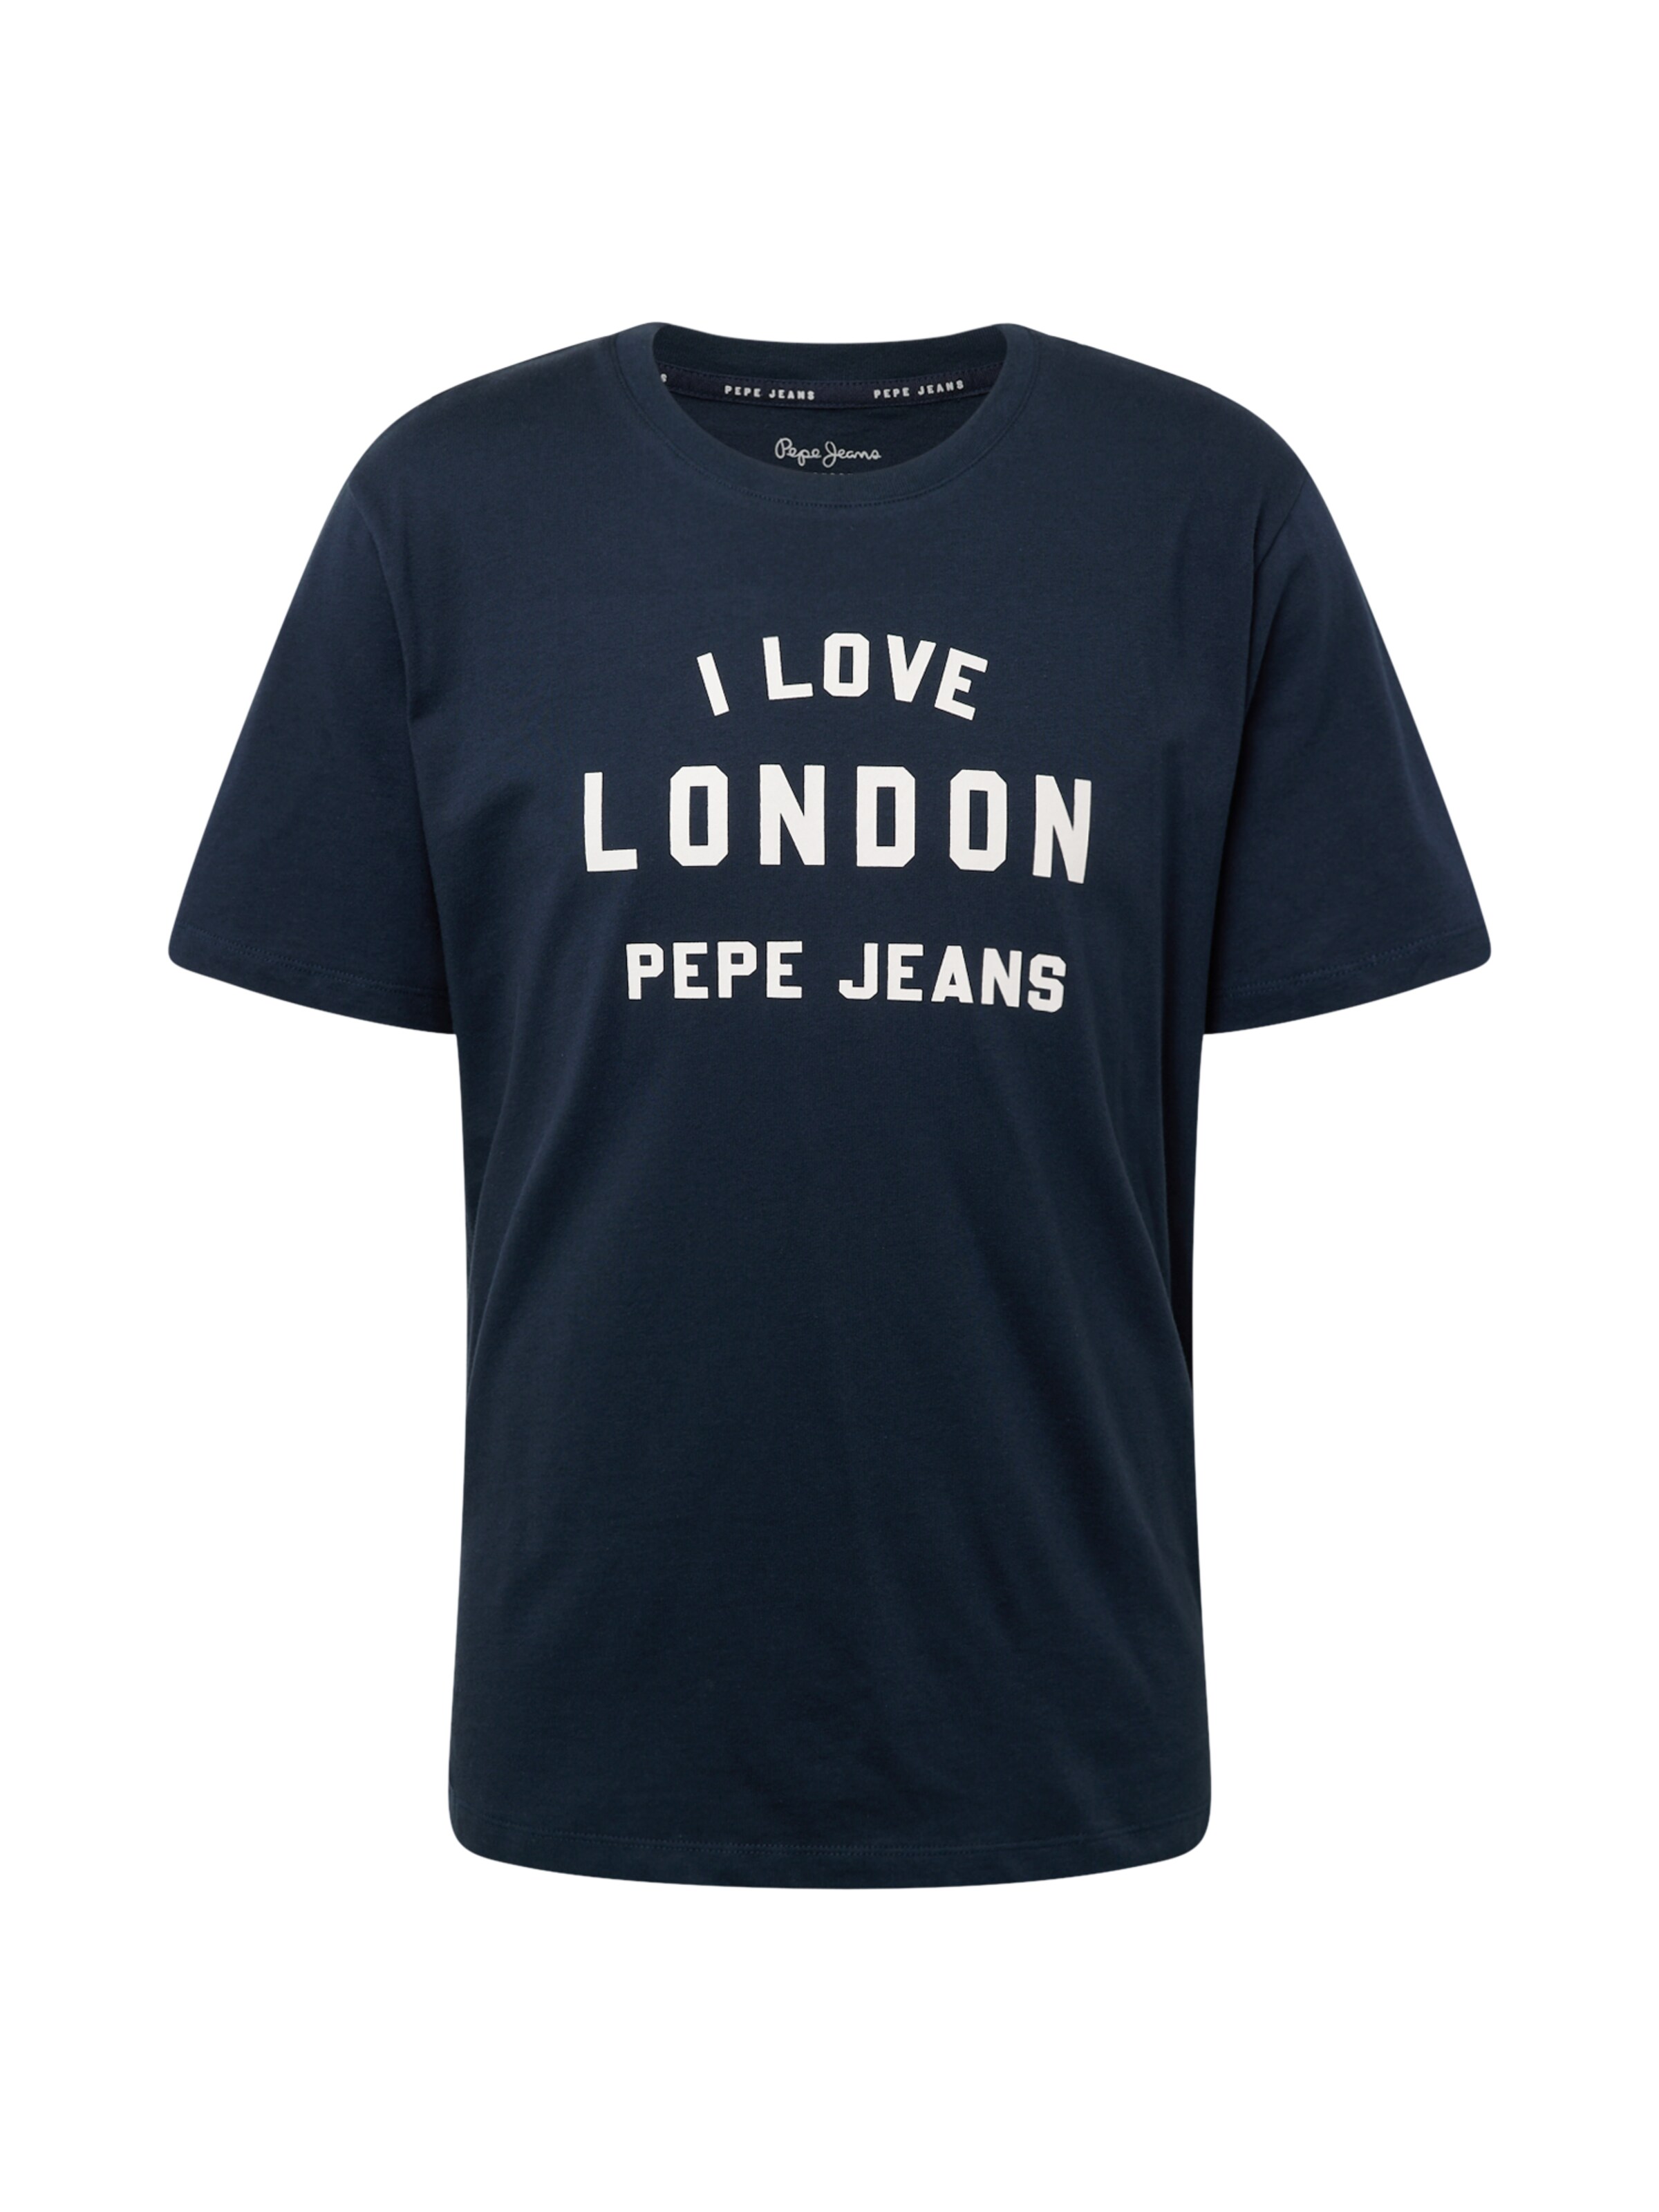 single stitch vintage pepe jeans tee shirt. great... - Depop